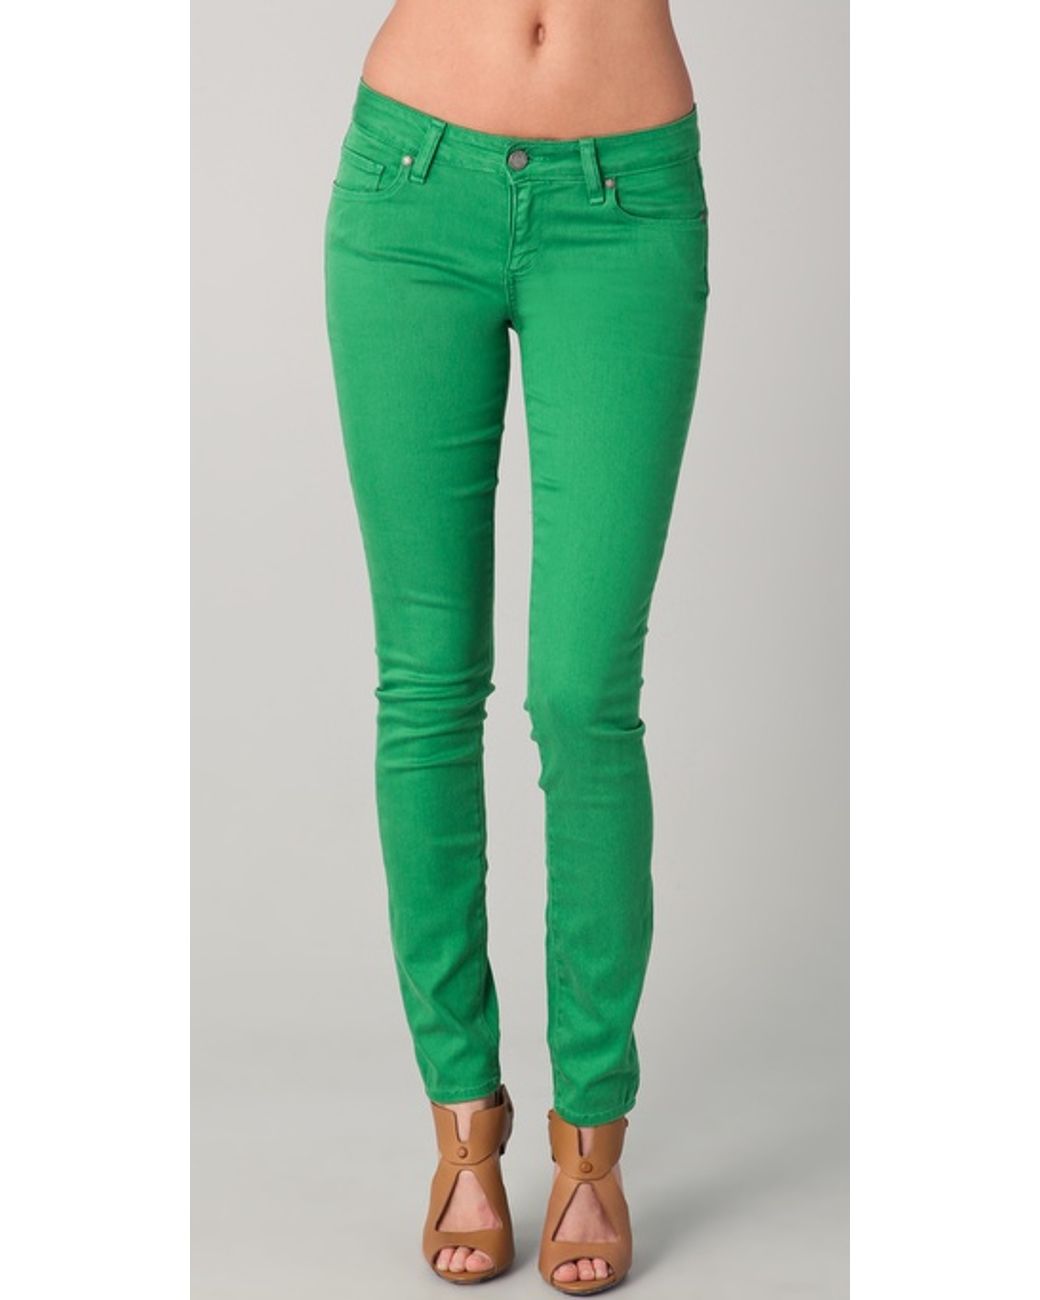 PAIGE Jeans Verdugo Ultra Skinny in Kelly Green | Lyst